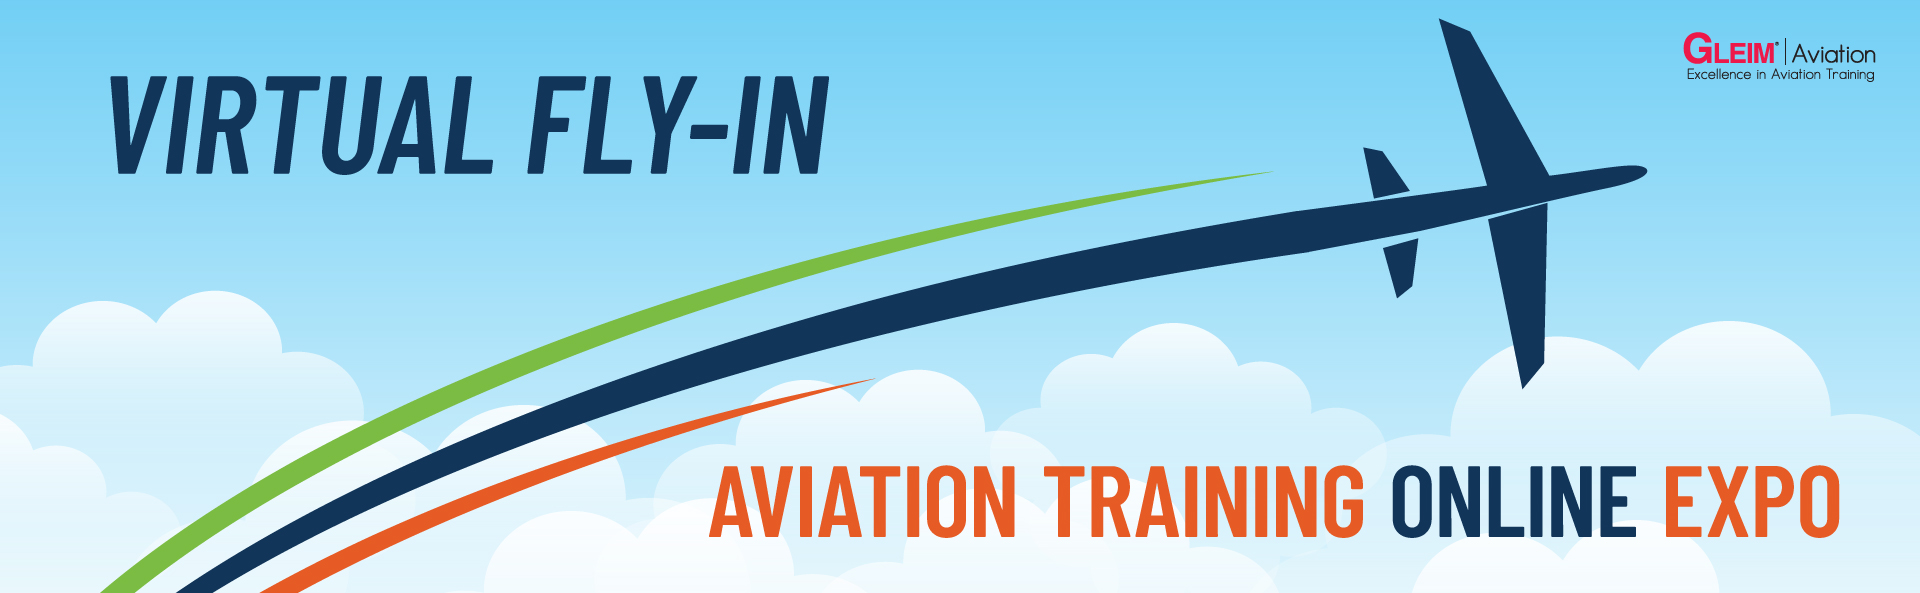 Aviation training online expo